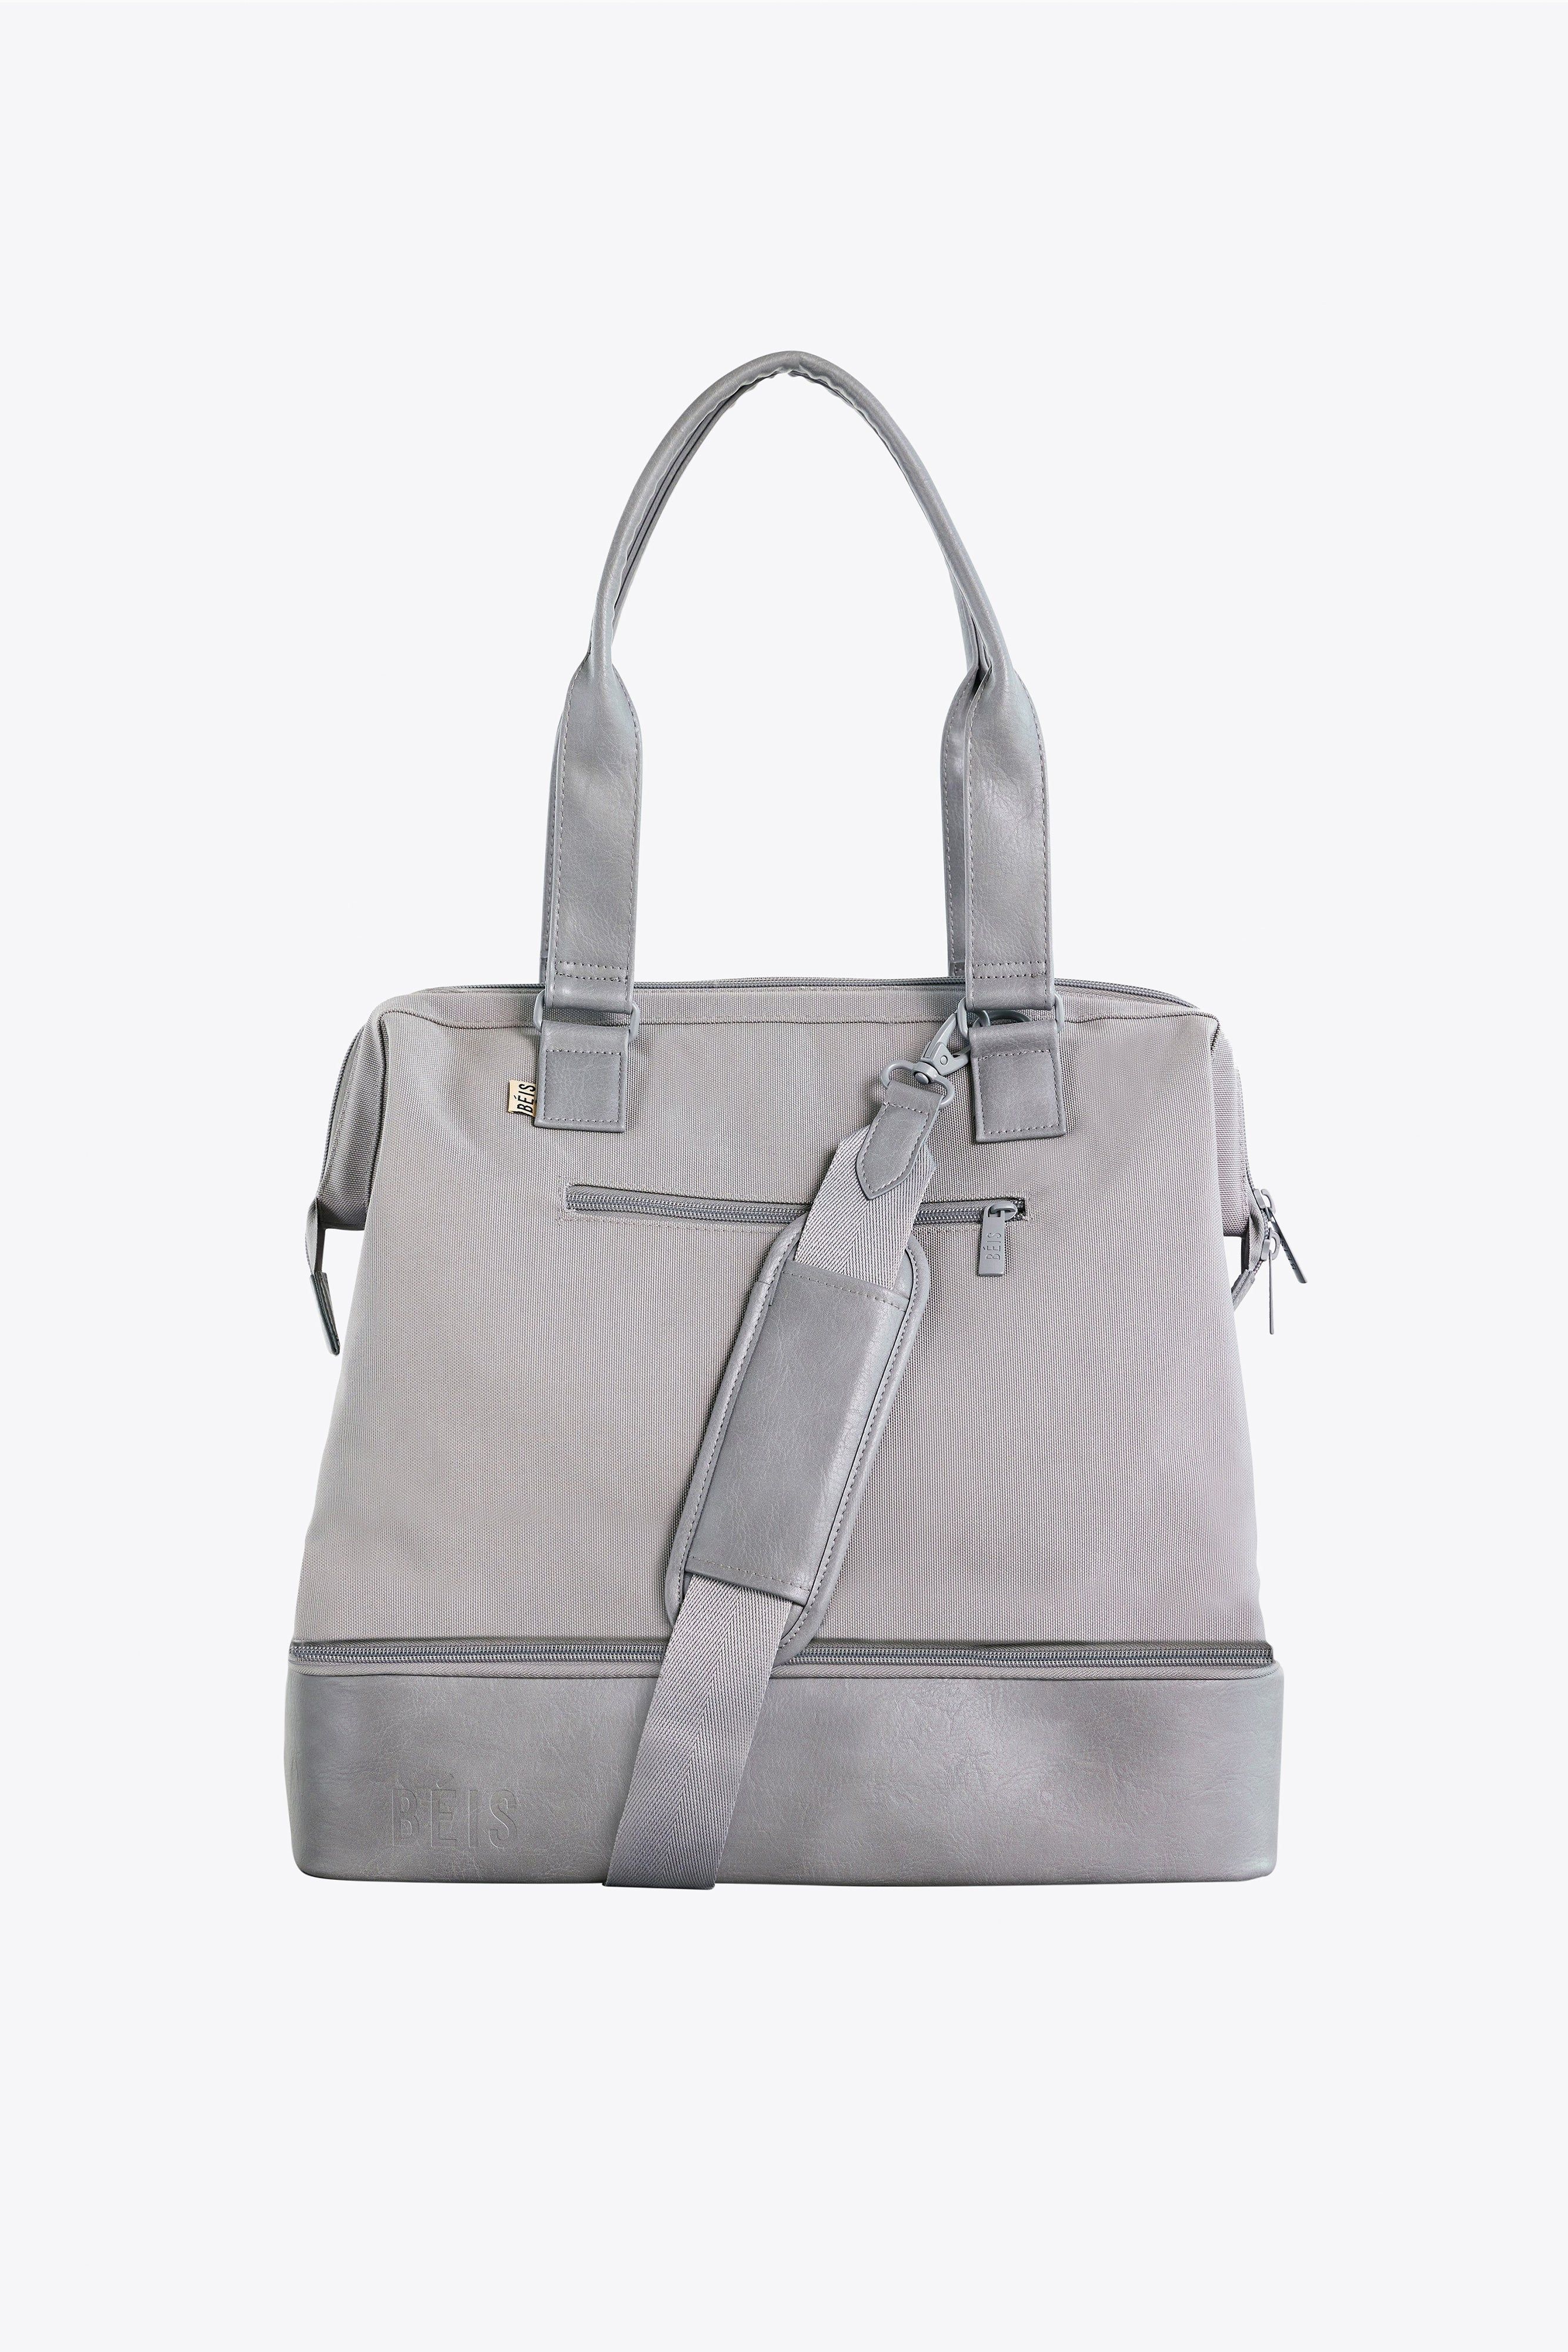 BÉIS 'The Convertible Mini Weekender' In Grey - Small Grey Weekender Bag & Overnight Bag | BÉIS Travel